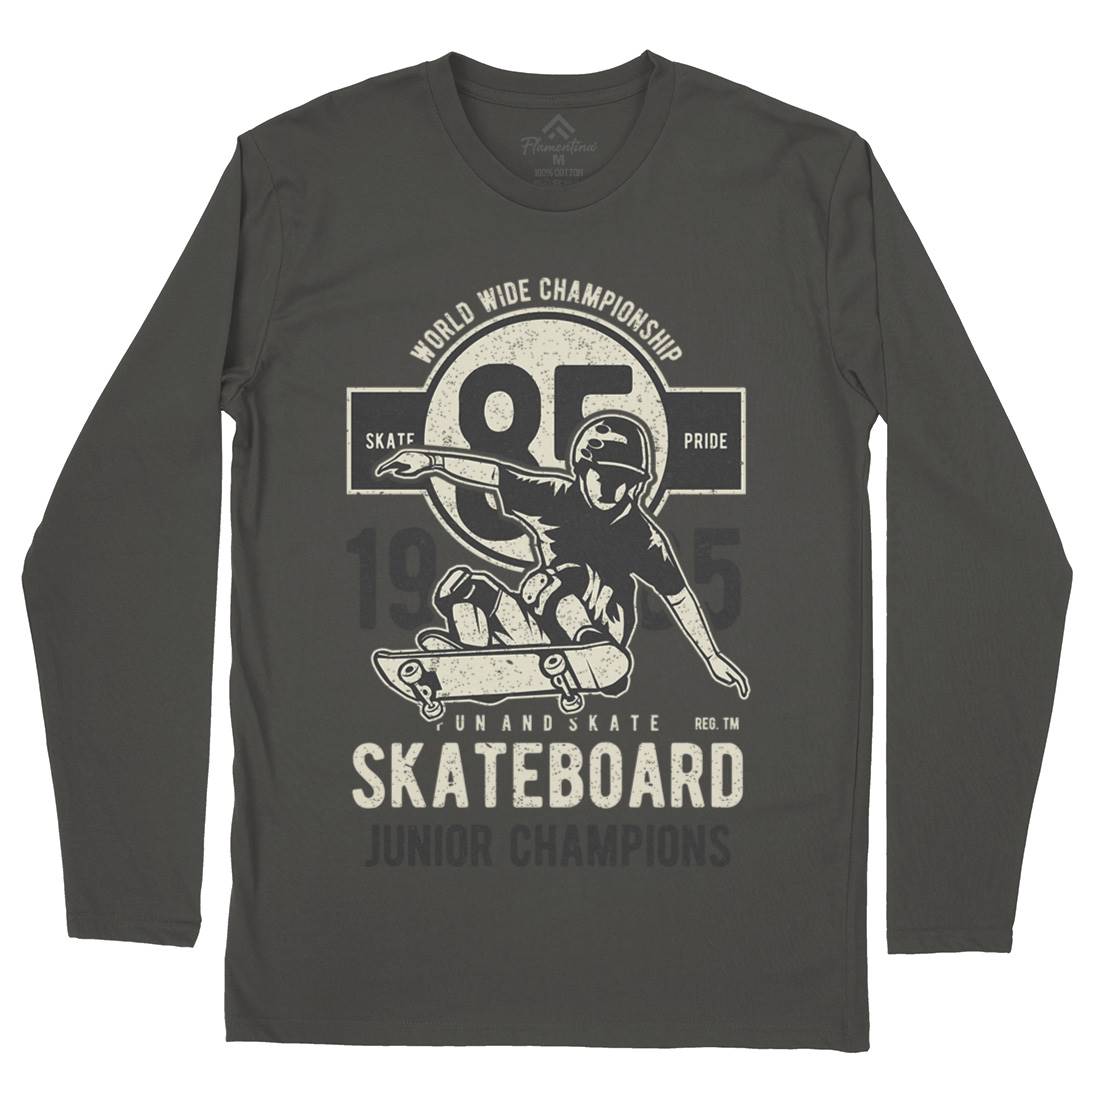 Skateboard Junior Champions Mens Long Sleeve T-Shirt Skate A755